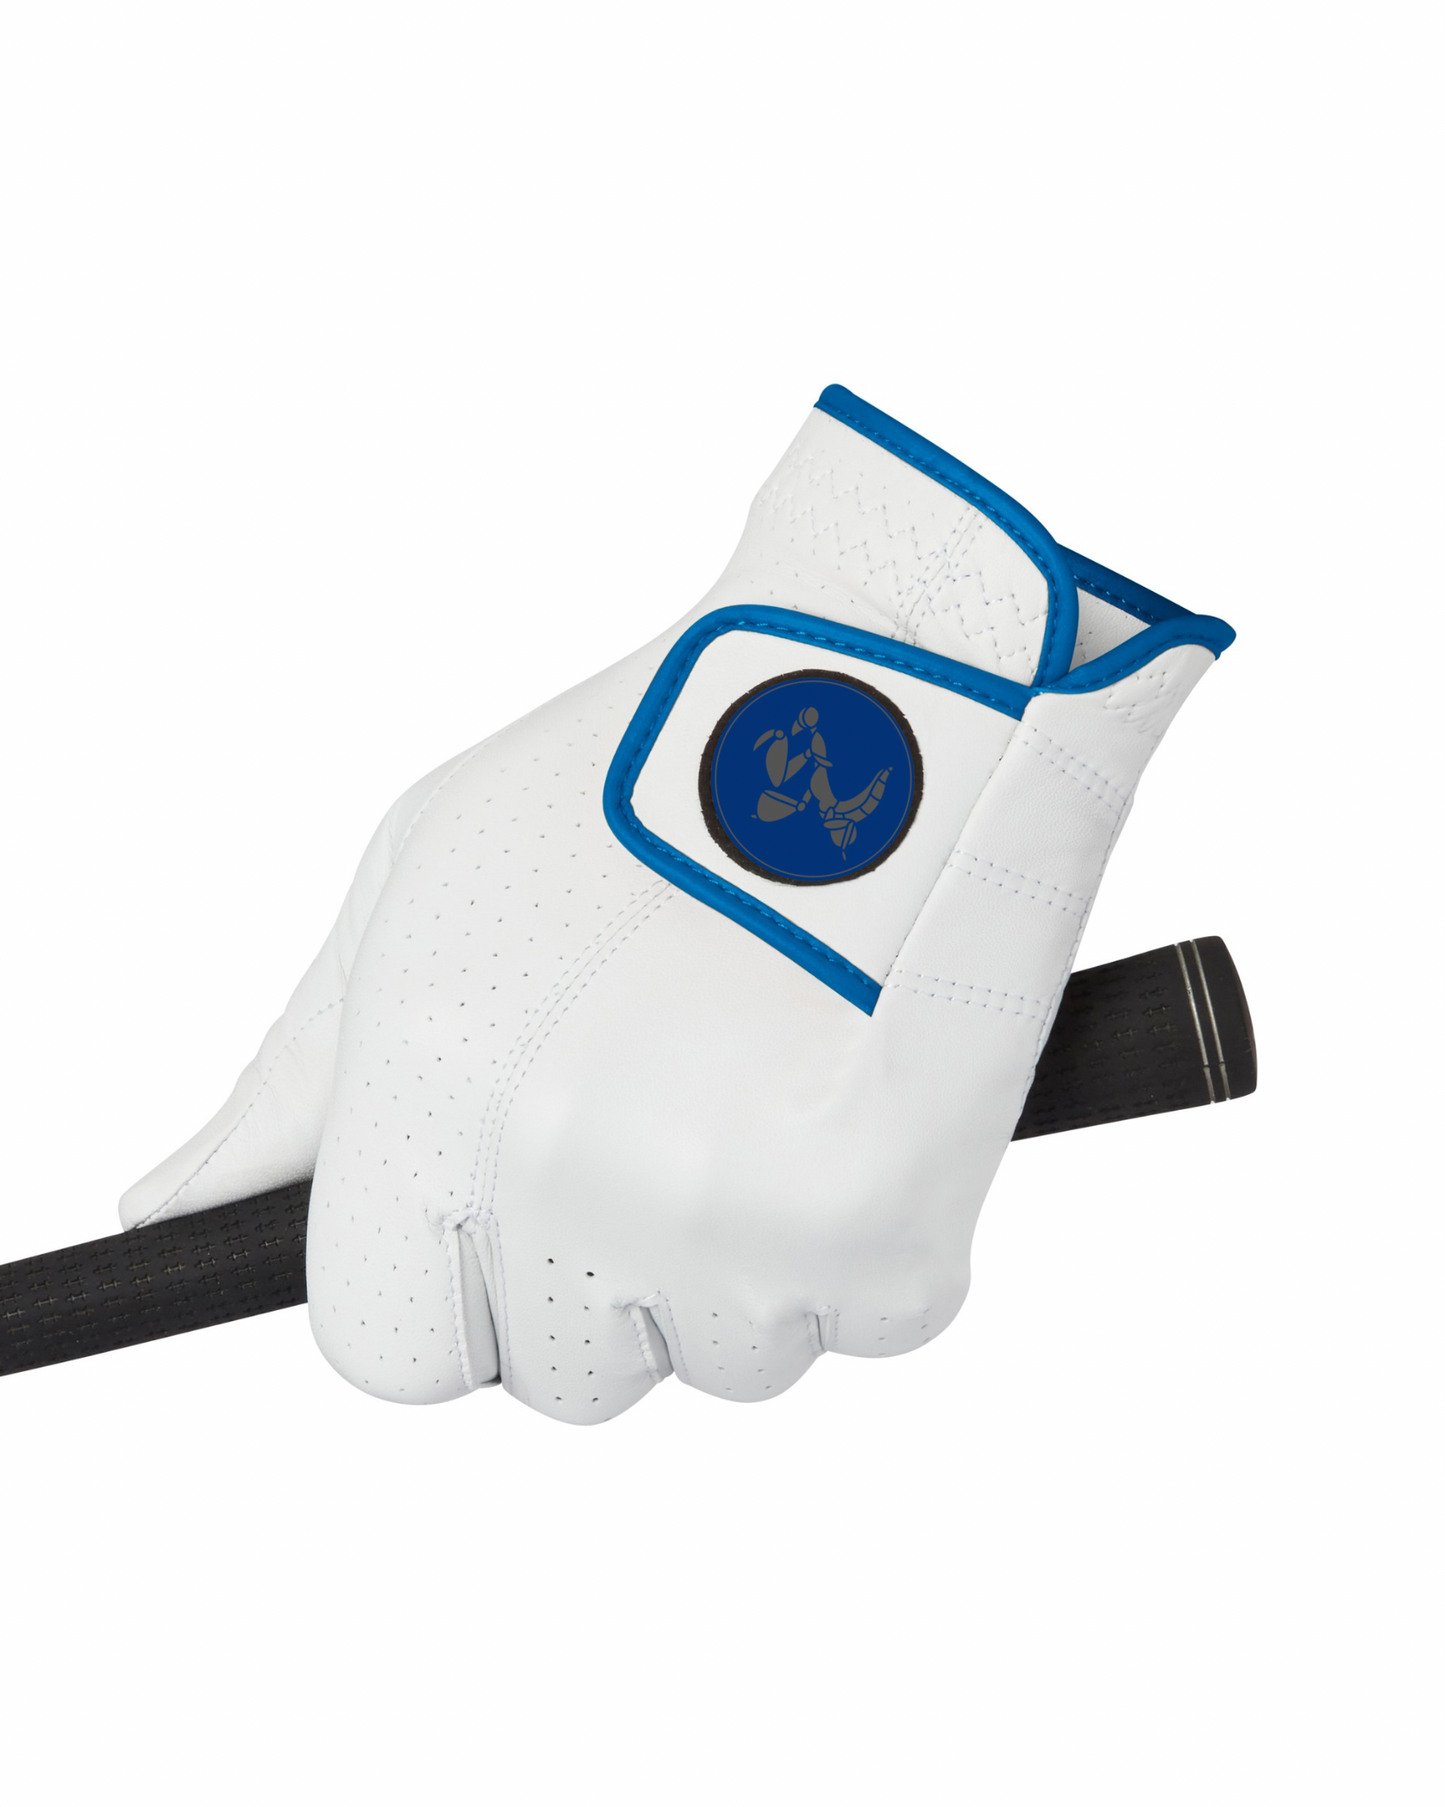 Ugogo Golf premium cabretta leather glove Blue logo & trim